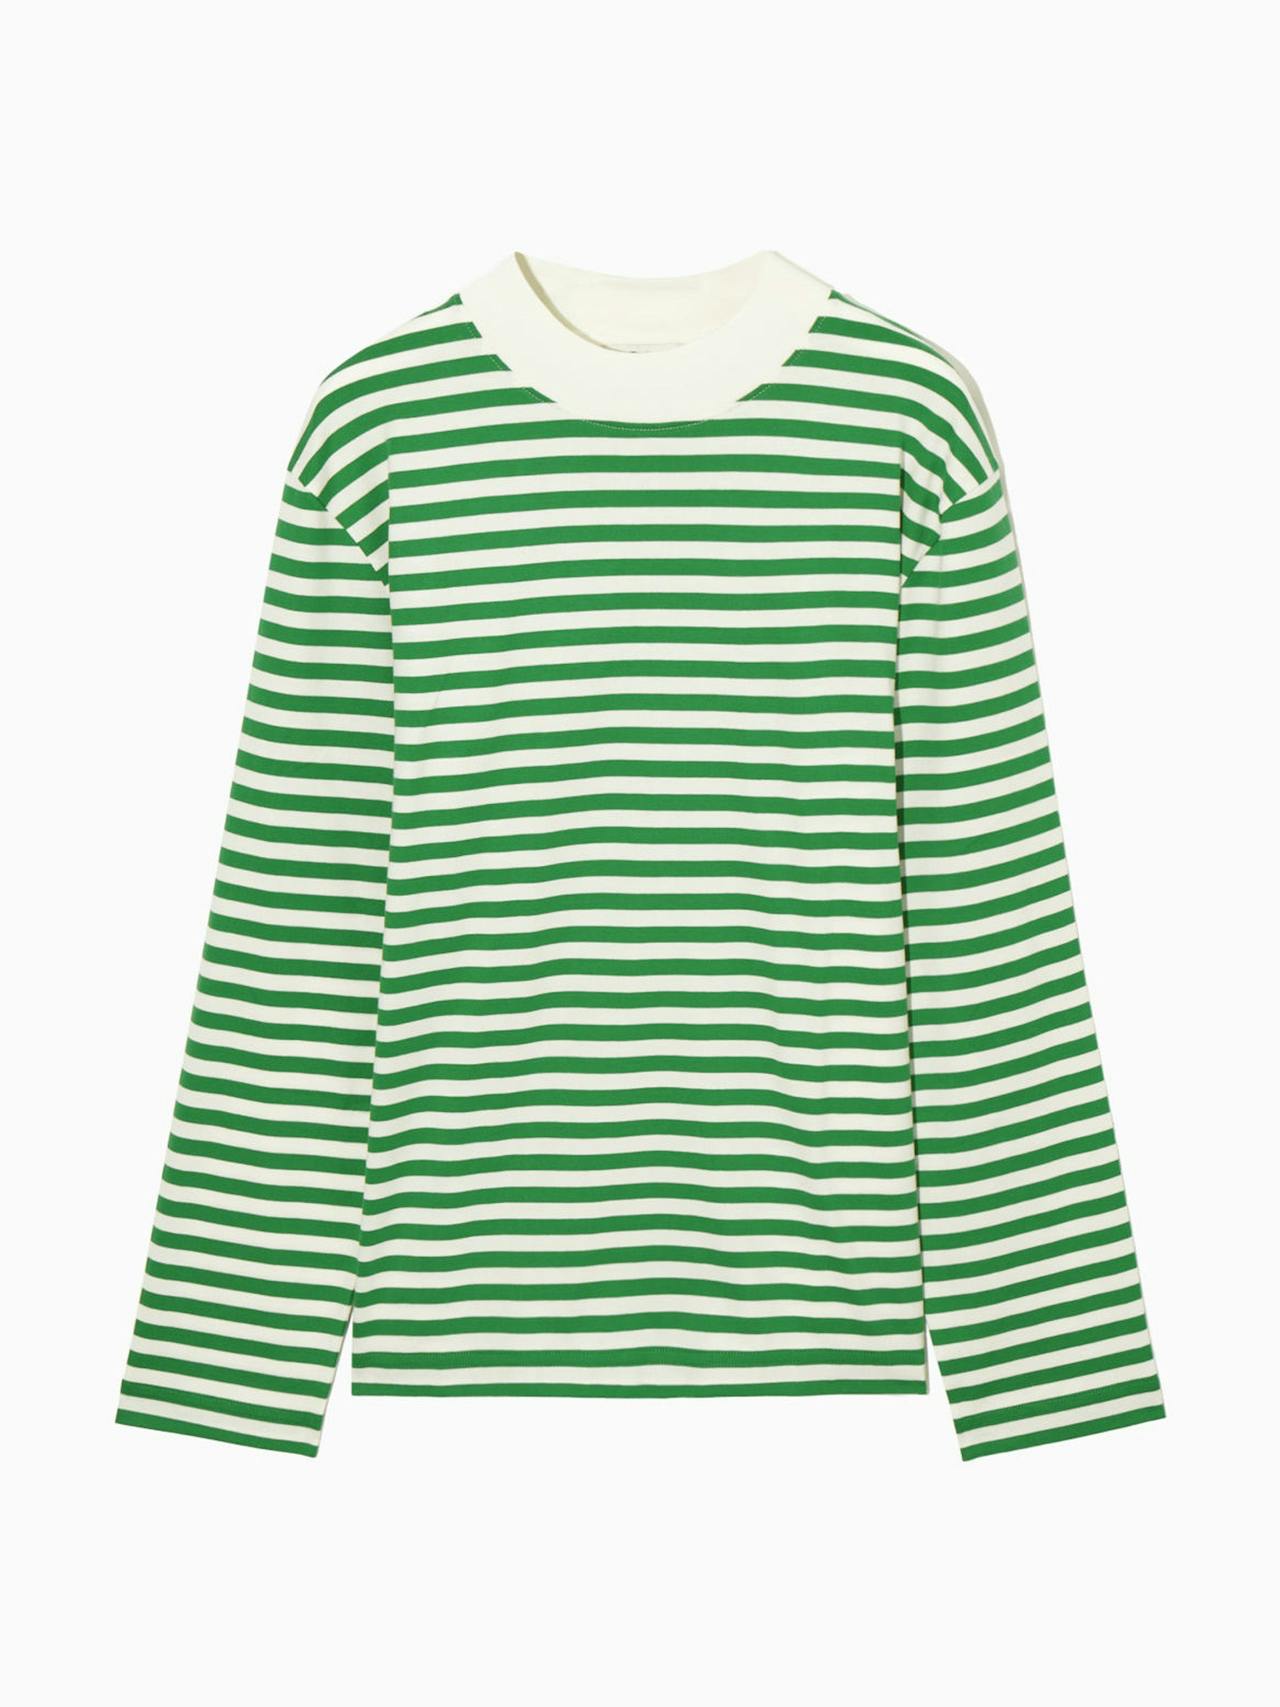 Green striped long sleeve t-shirt